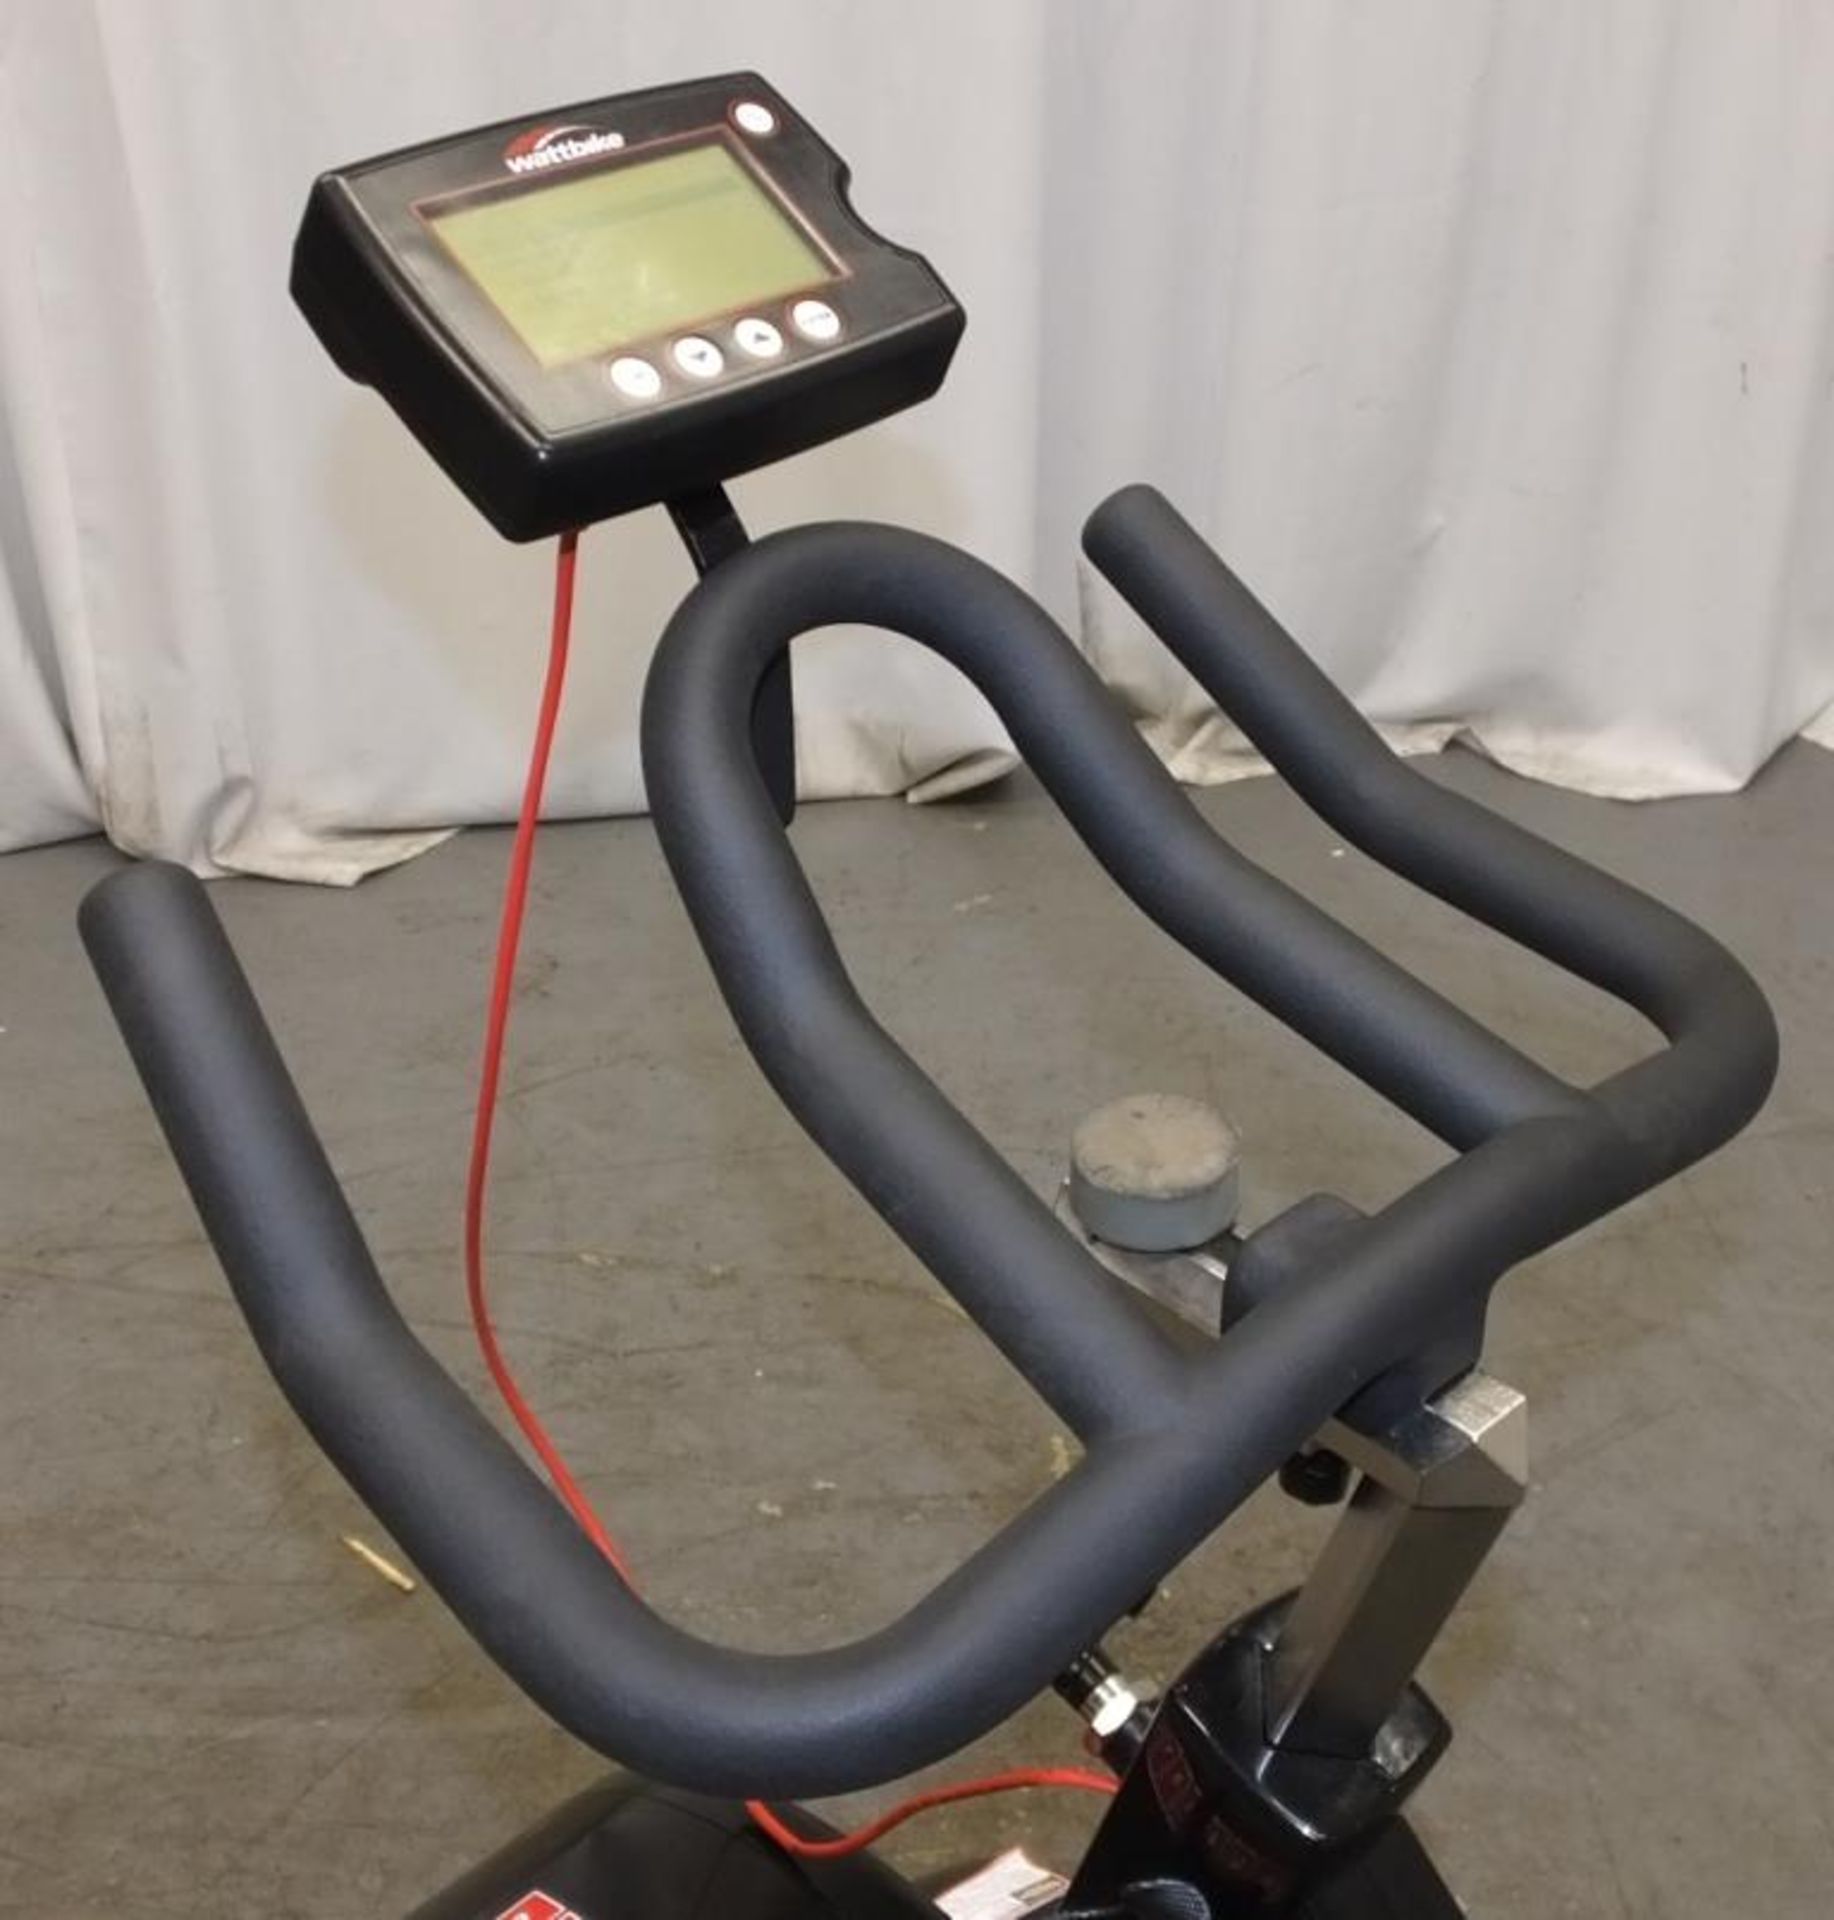 Wattbike Training Exercise Bike - console powers up - functionality untested - Image 4 of 8